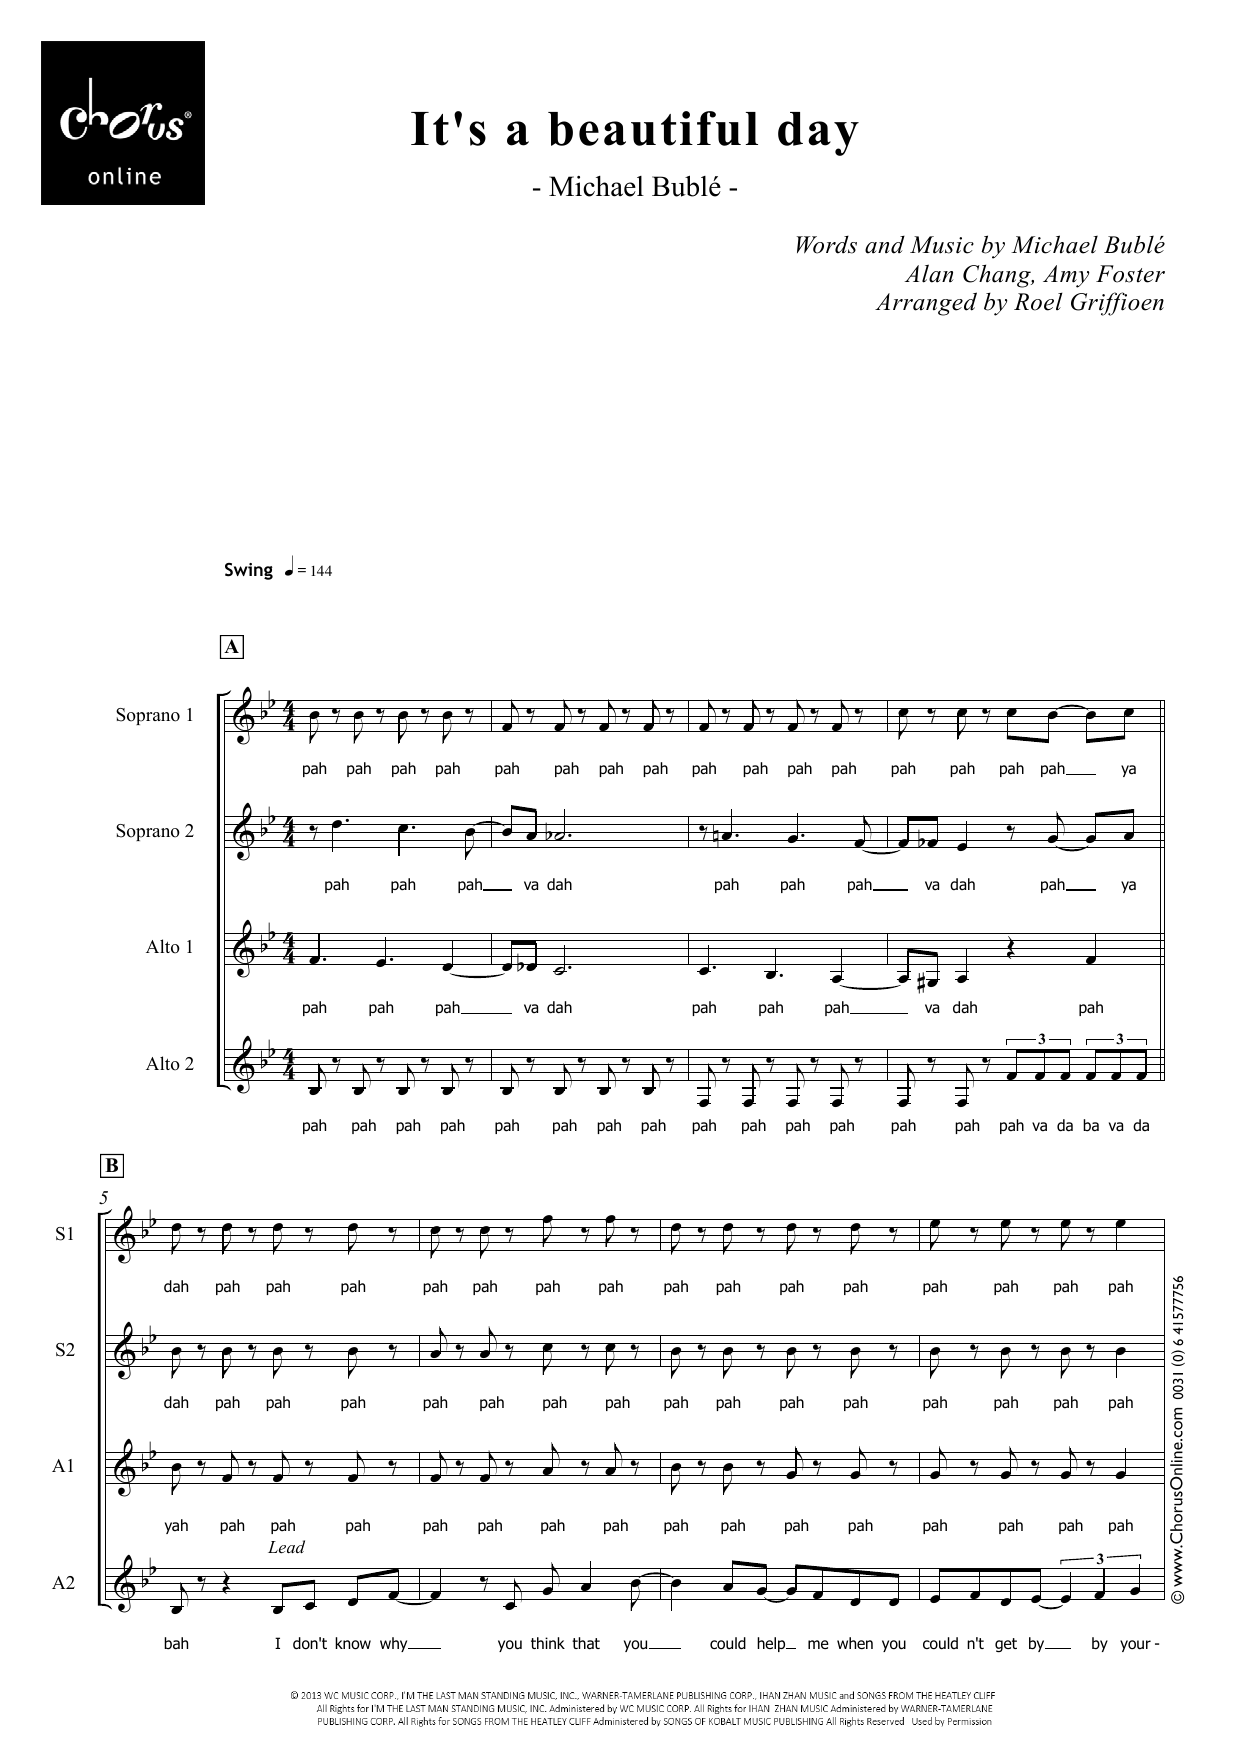 Michael Bublé It's a Beautiful Day (arr. Roel Griffioen) sheet music notes printable PDF score